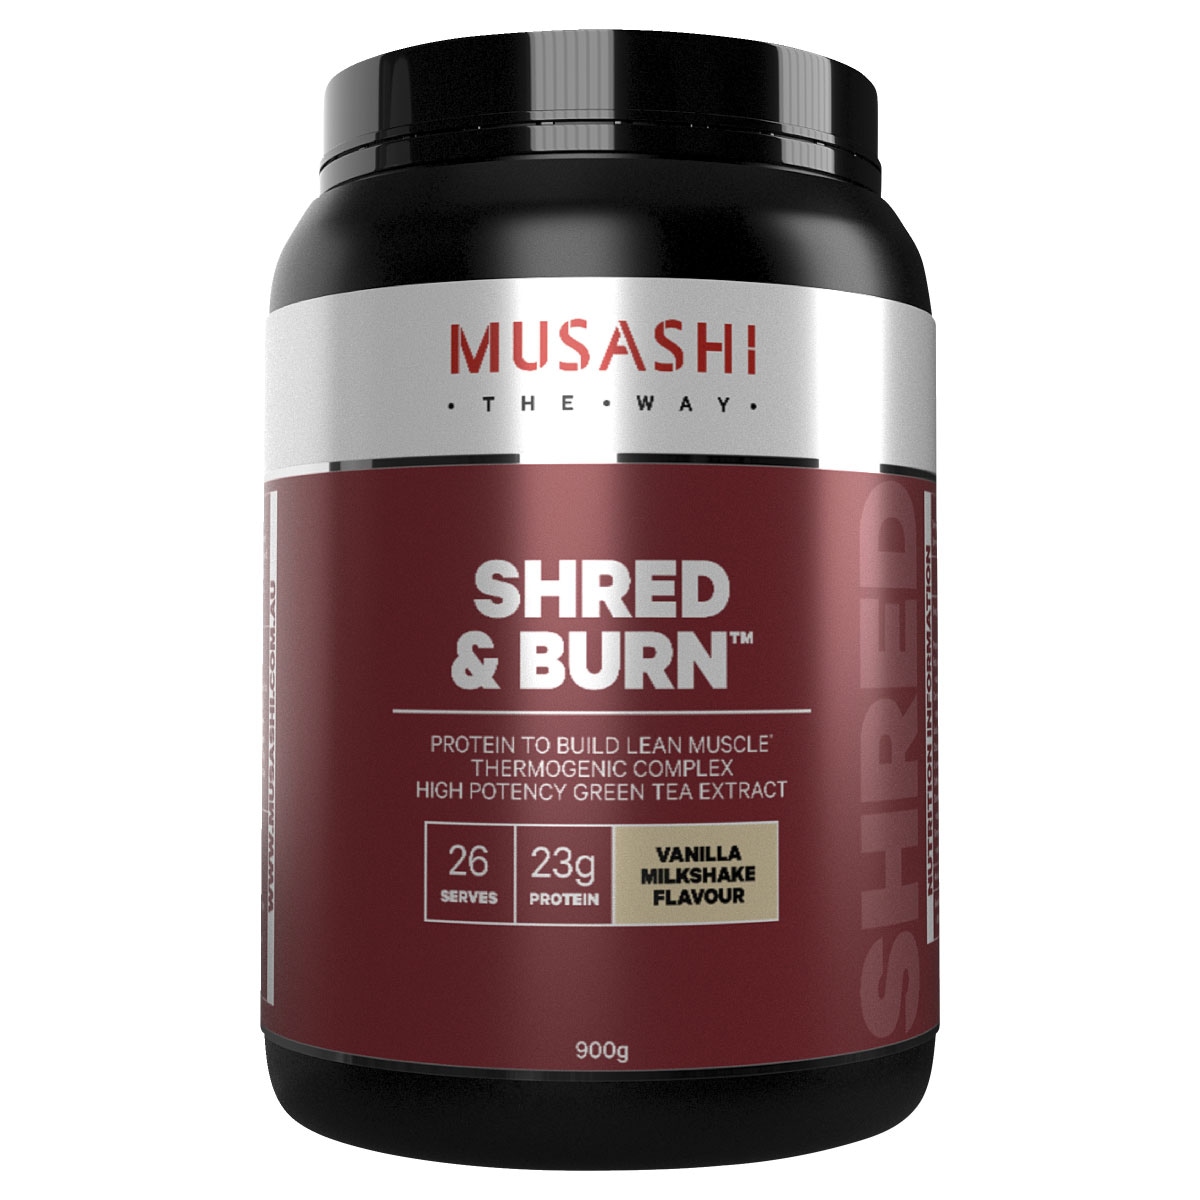 Musashi Shred & Burn Protein Vanilla Milkshake 900g Australia